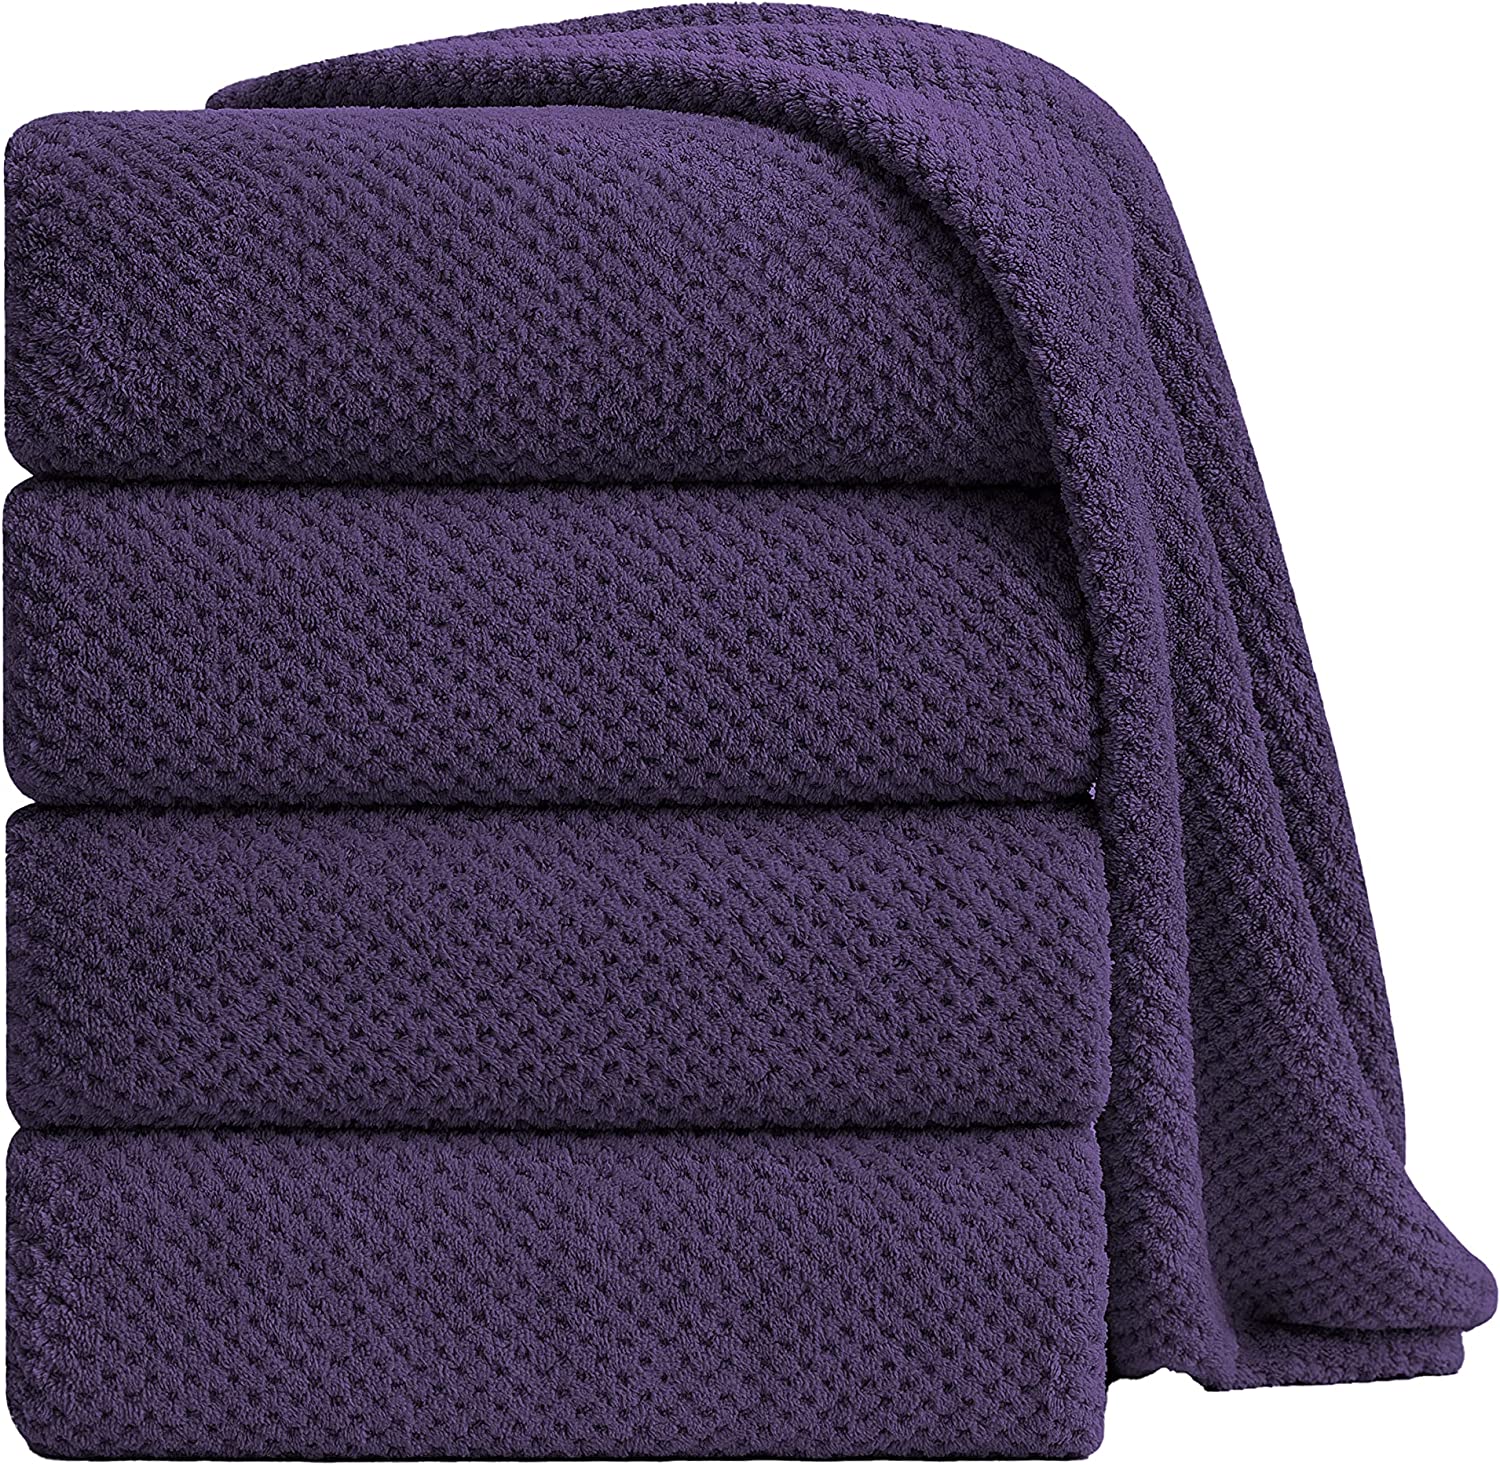 4 Piece Extra Large Bath Towel Set - 35x70 - Purple - Super